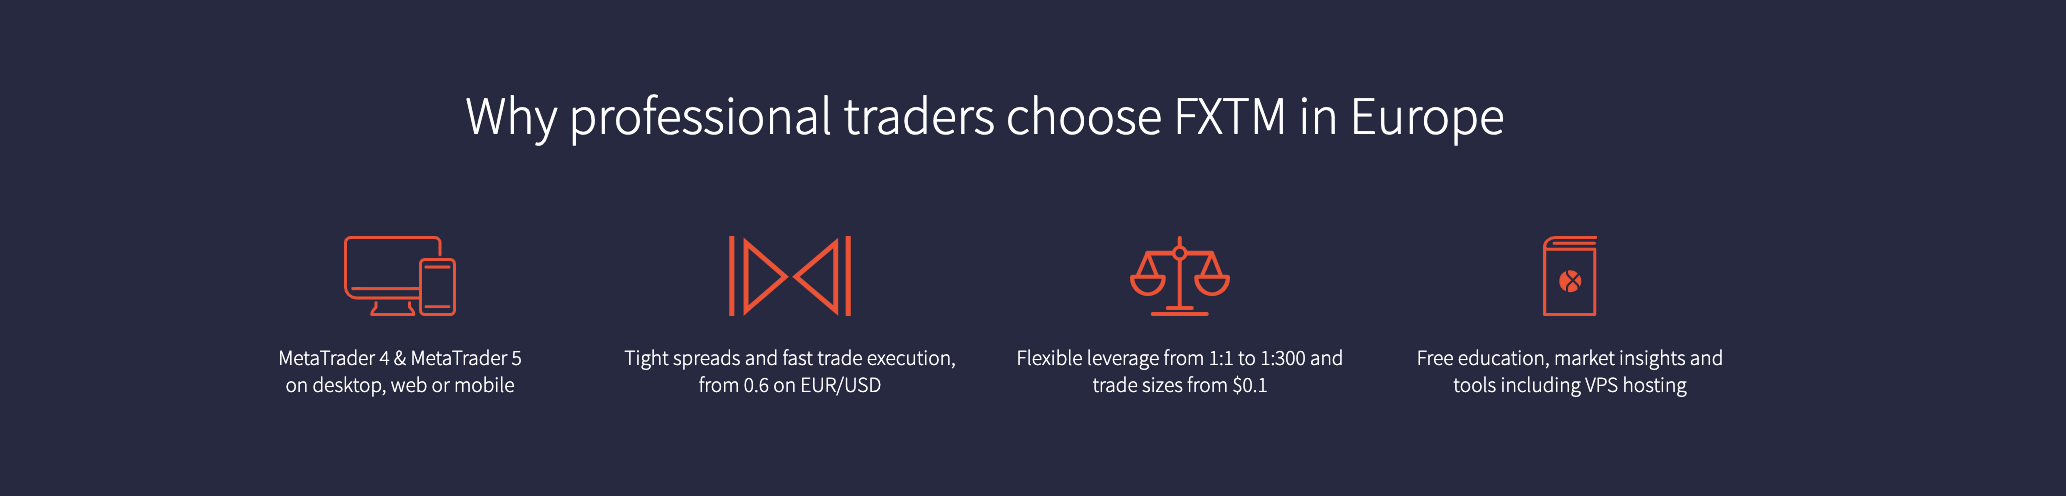 Zalety handlu z FXTM